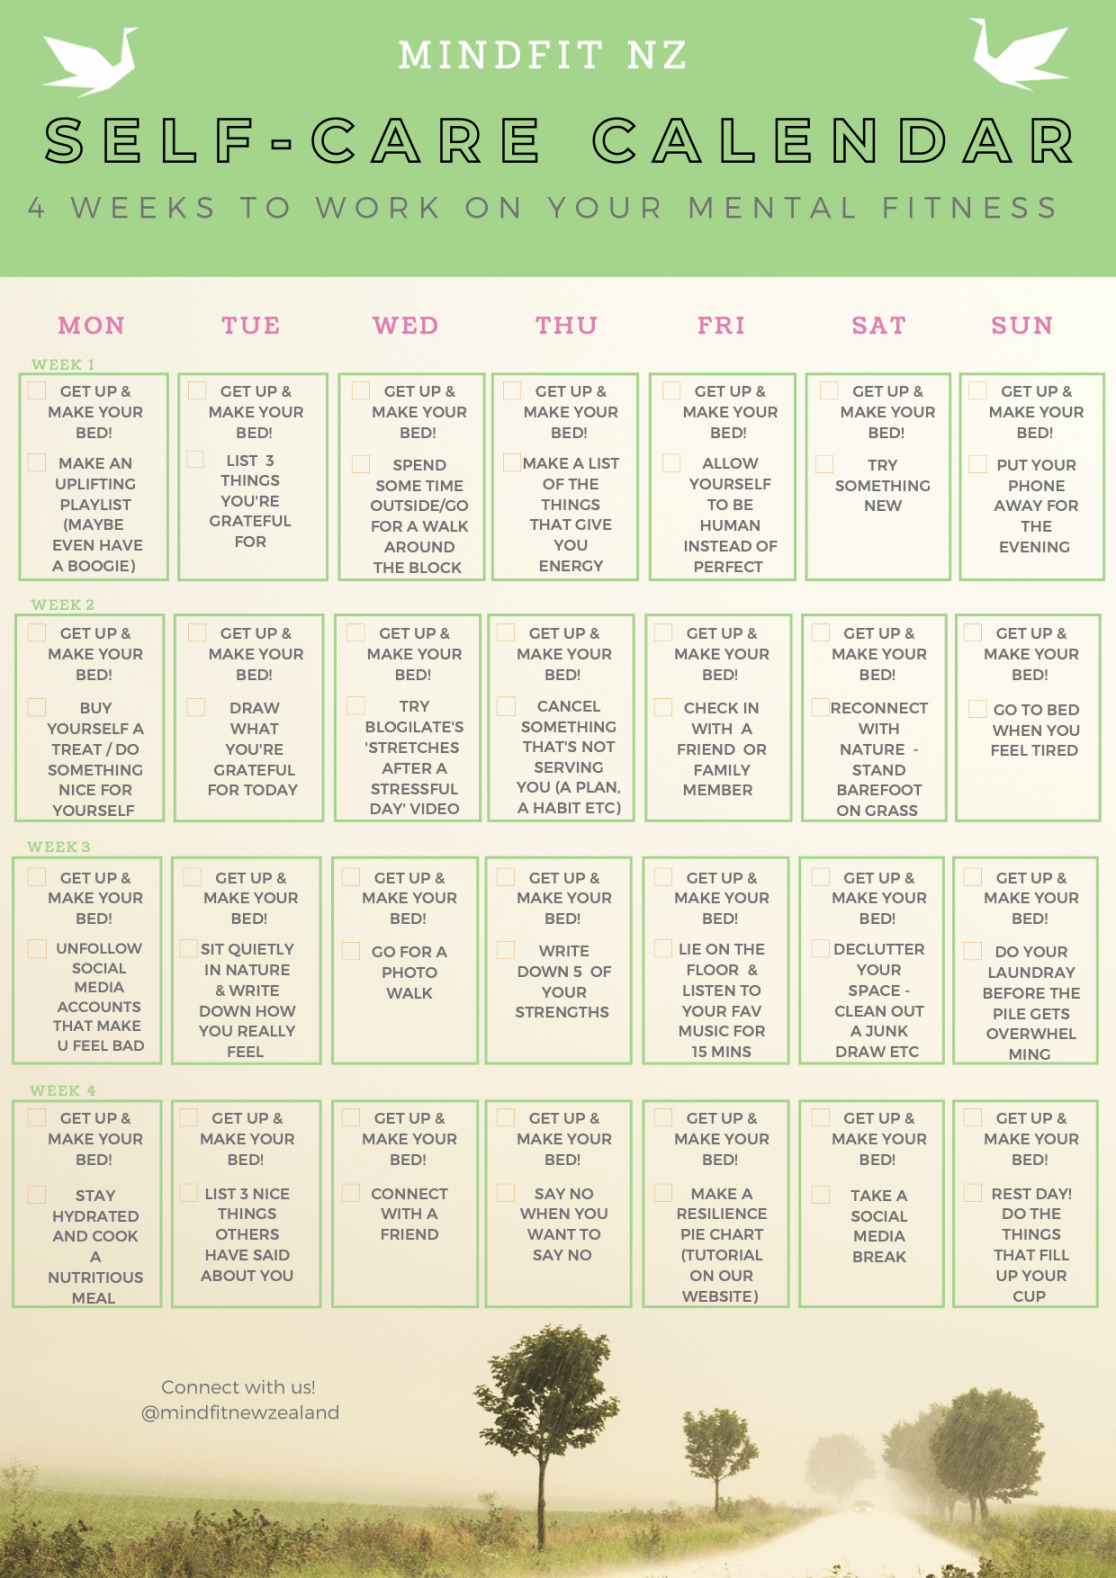 Mindfit NZ - Self-Care Calendar